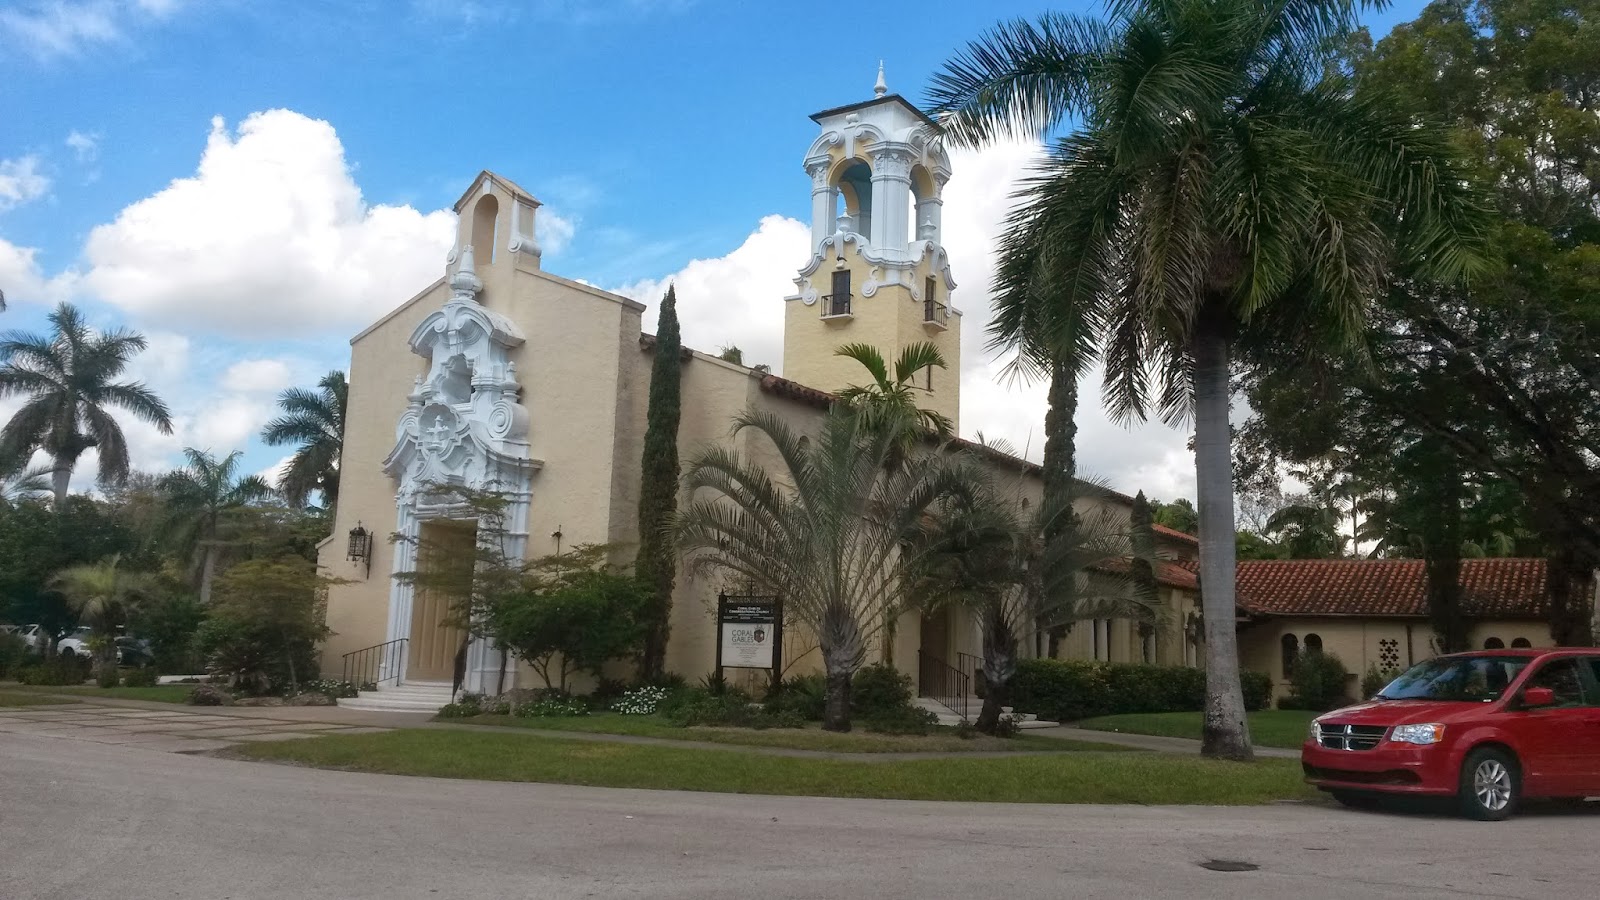 Congregational Church, Coral Gables, Miami, Florida, Elisa N, Blog de Viajes, Lifestyle, Travel